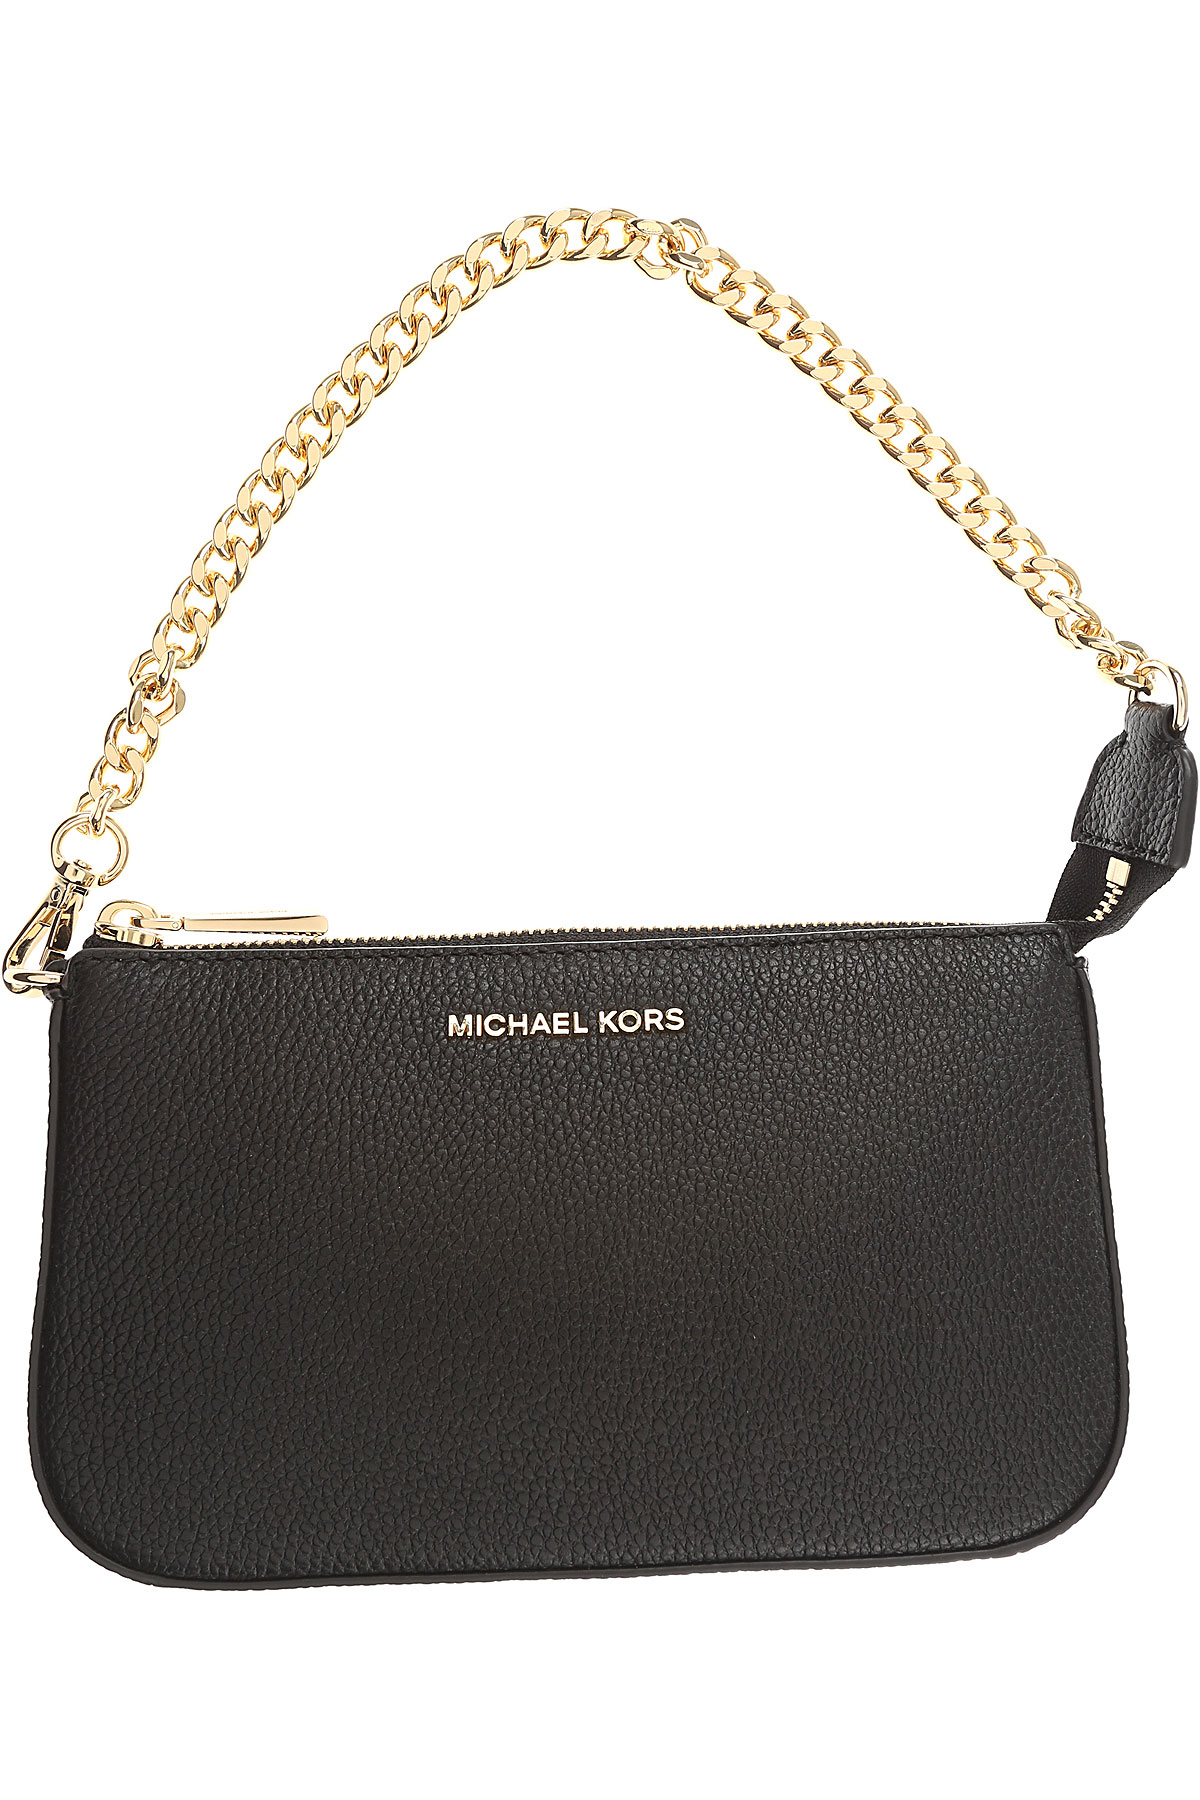 Handbags Michael Kors, Style code: 32f7gfdw6l-001-A551